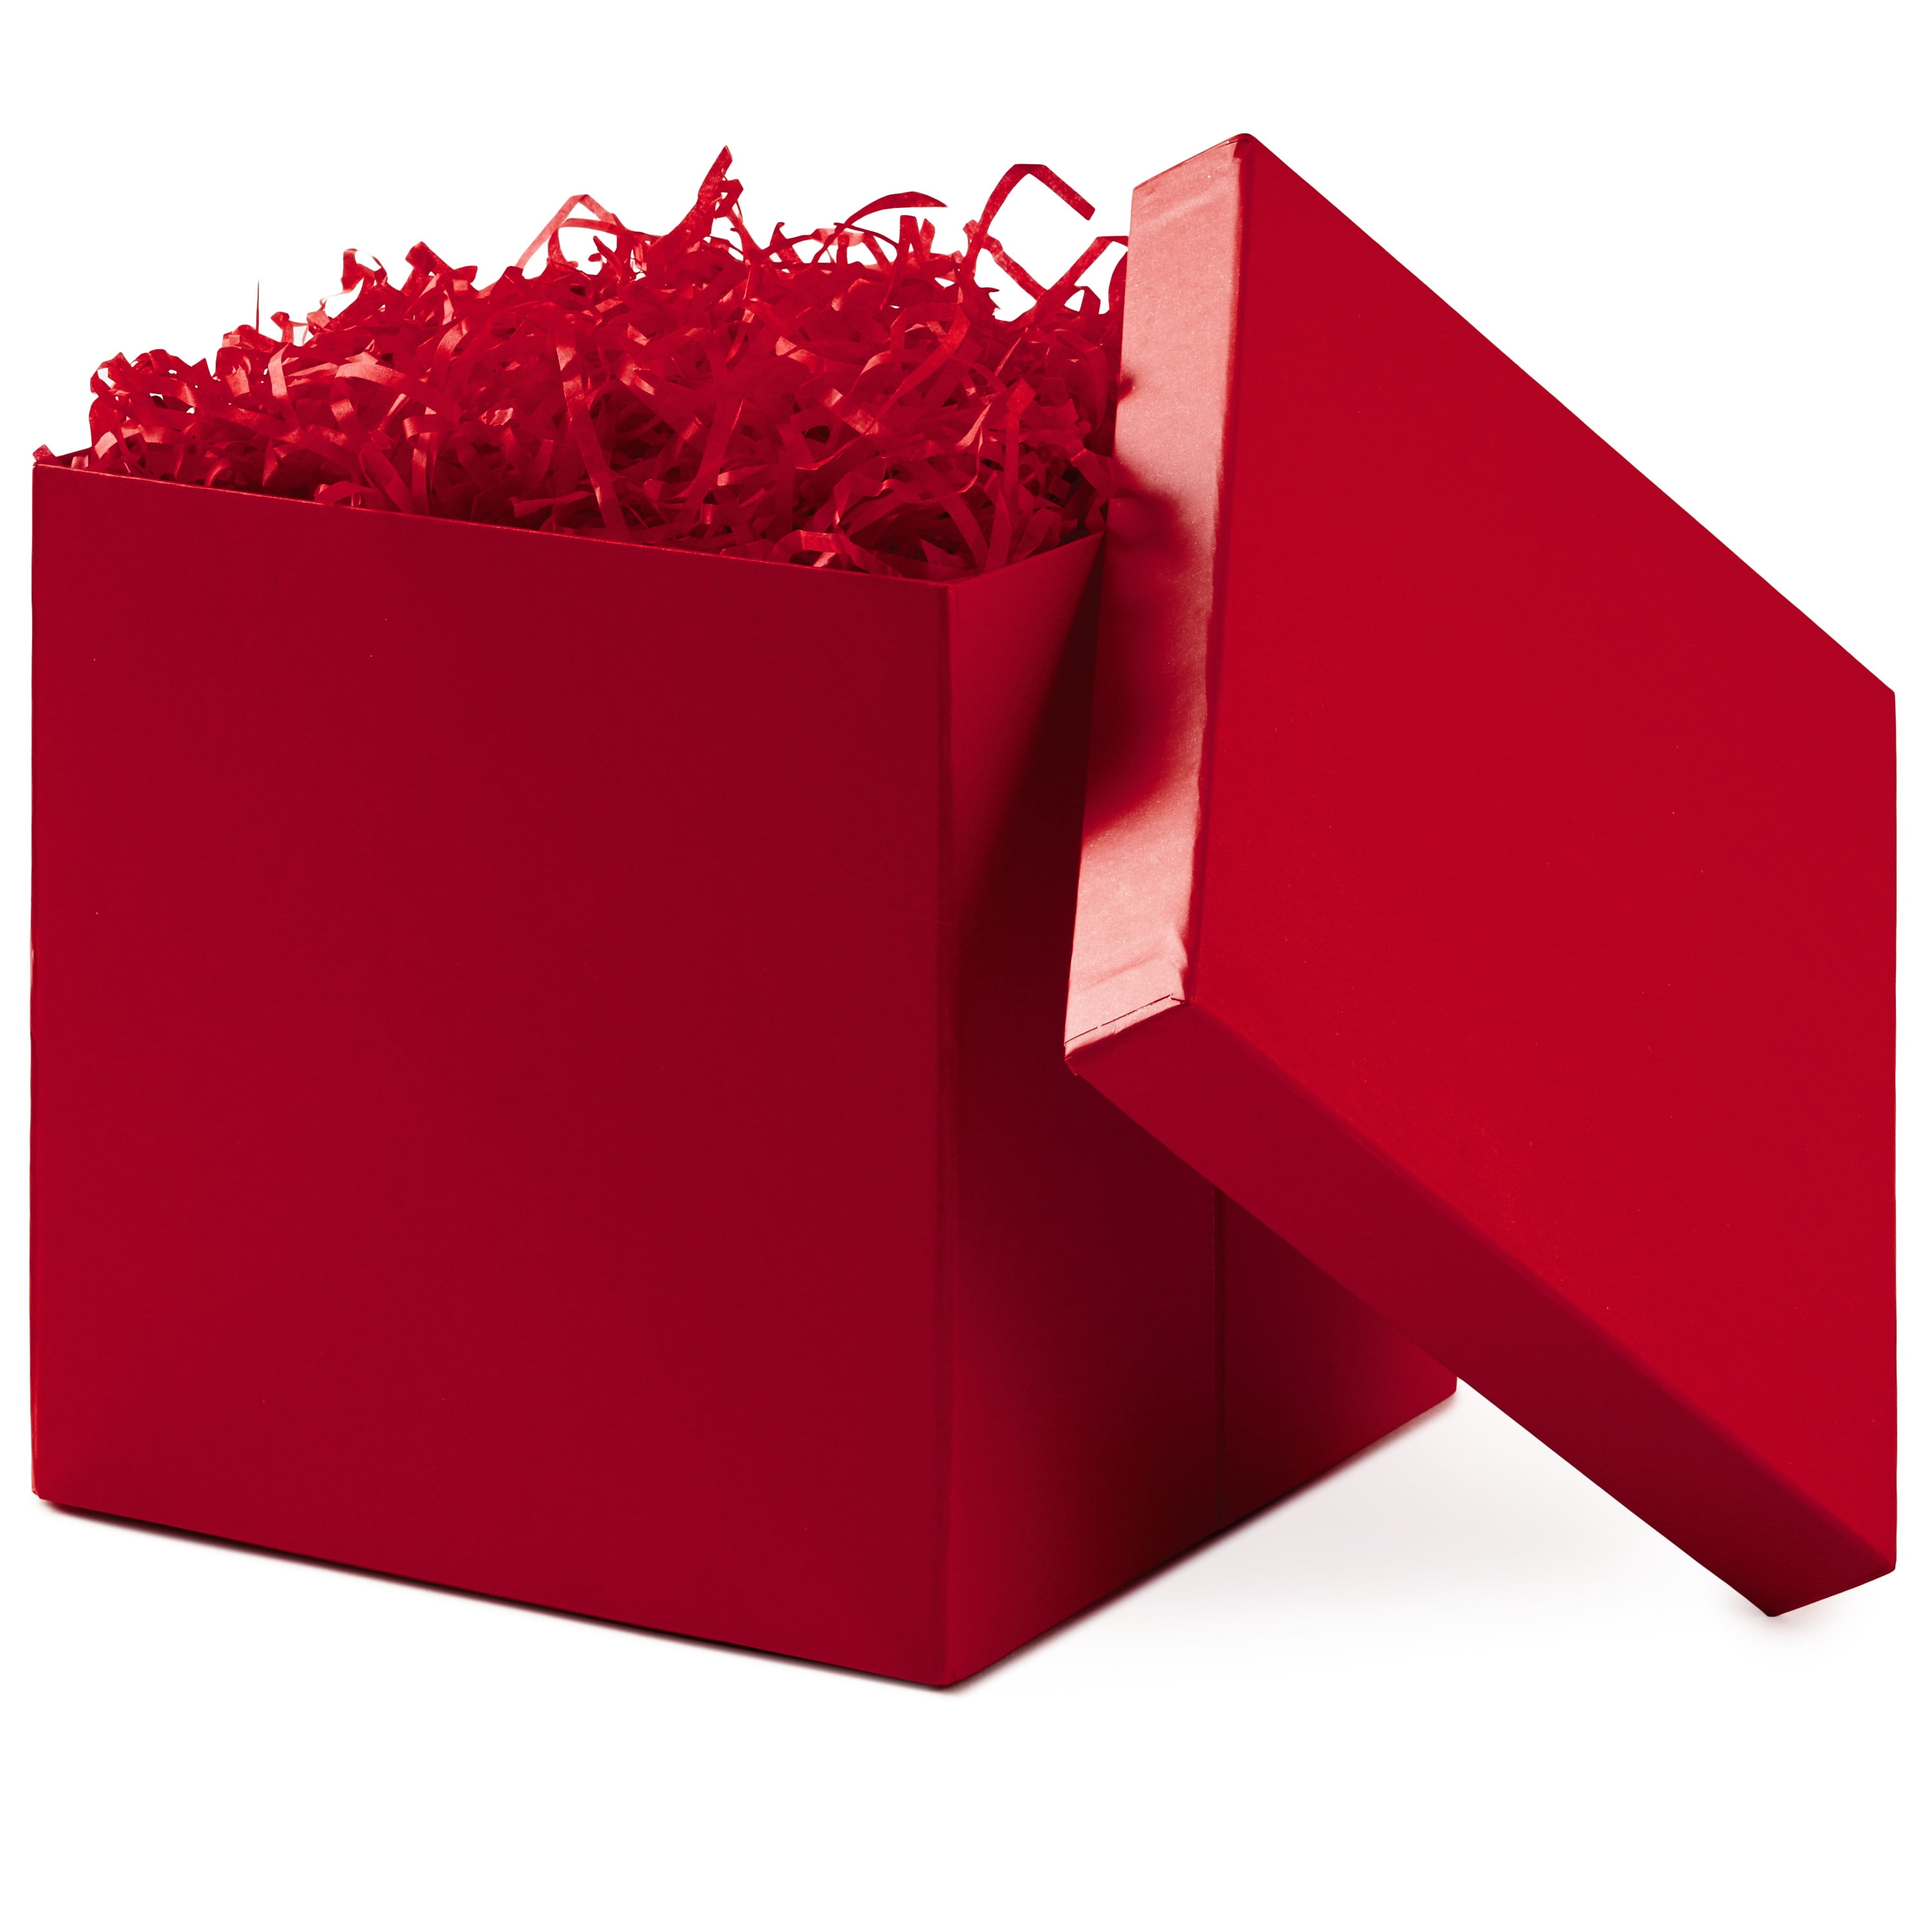 Hallmark Gift Card Holder Mini Boxes 3-Pack, Assorted Birthday